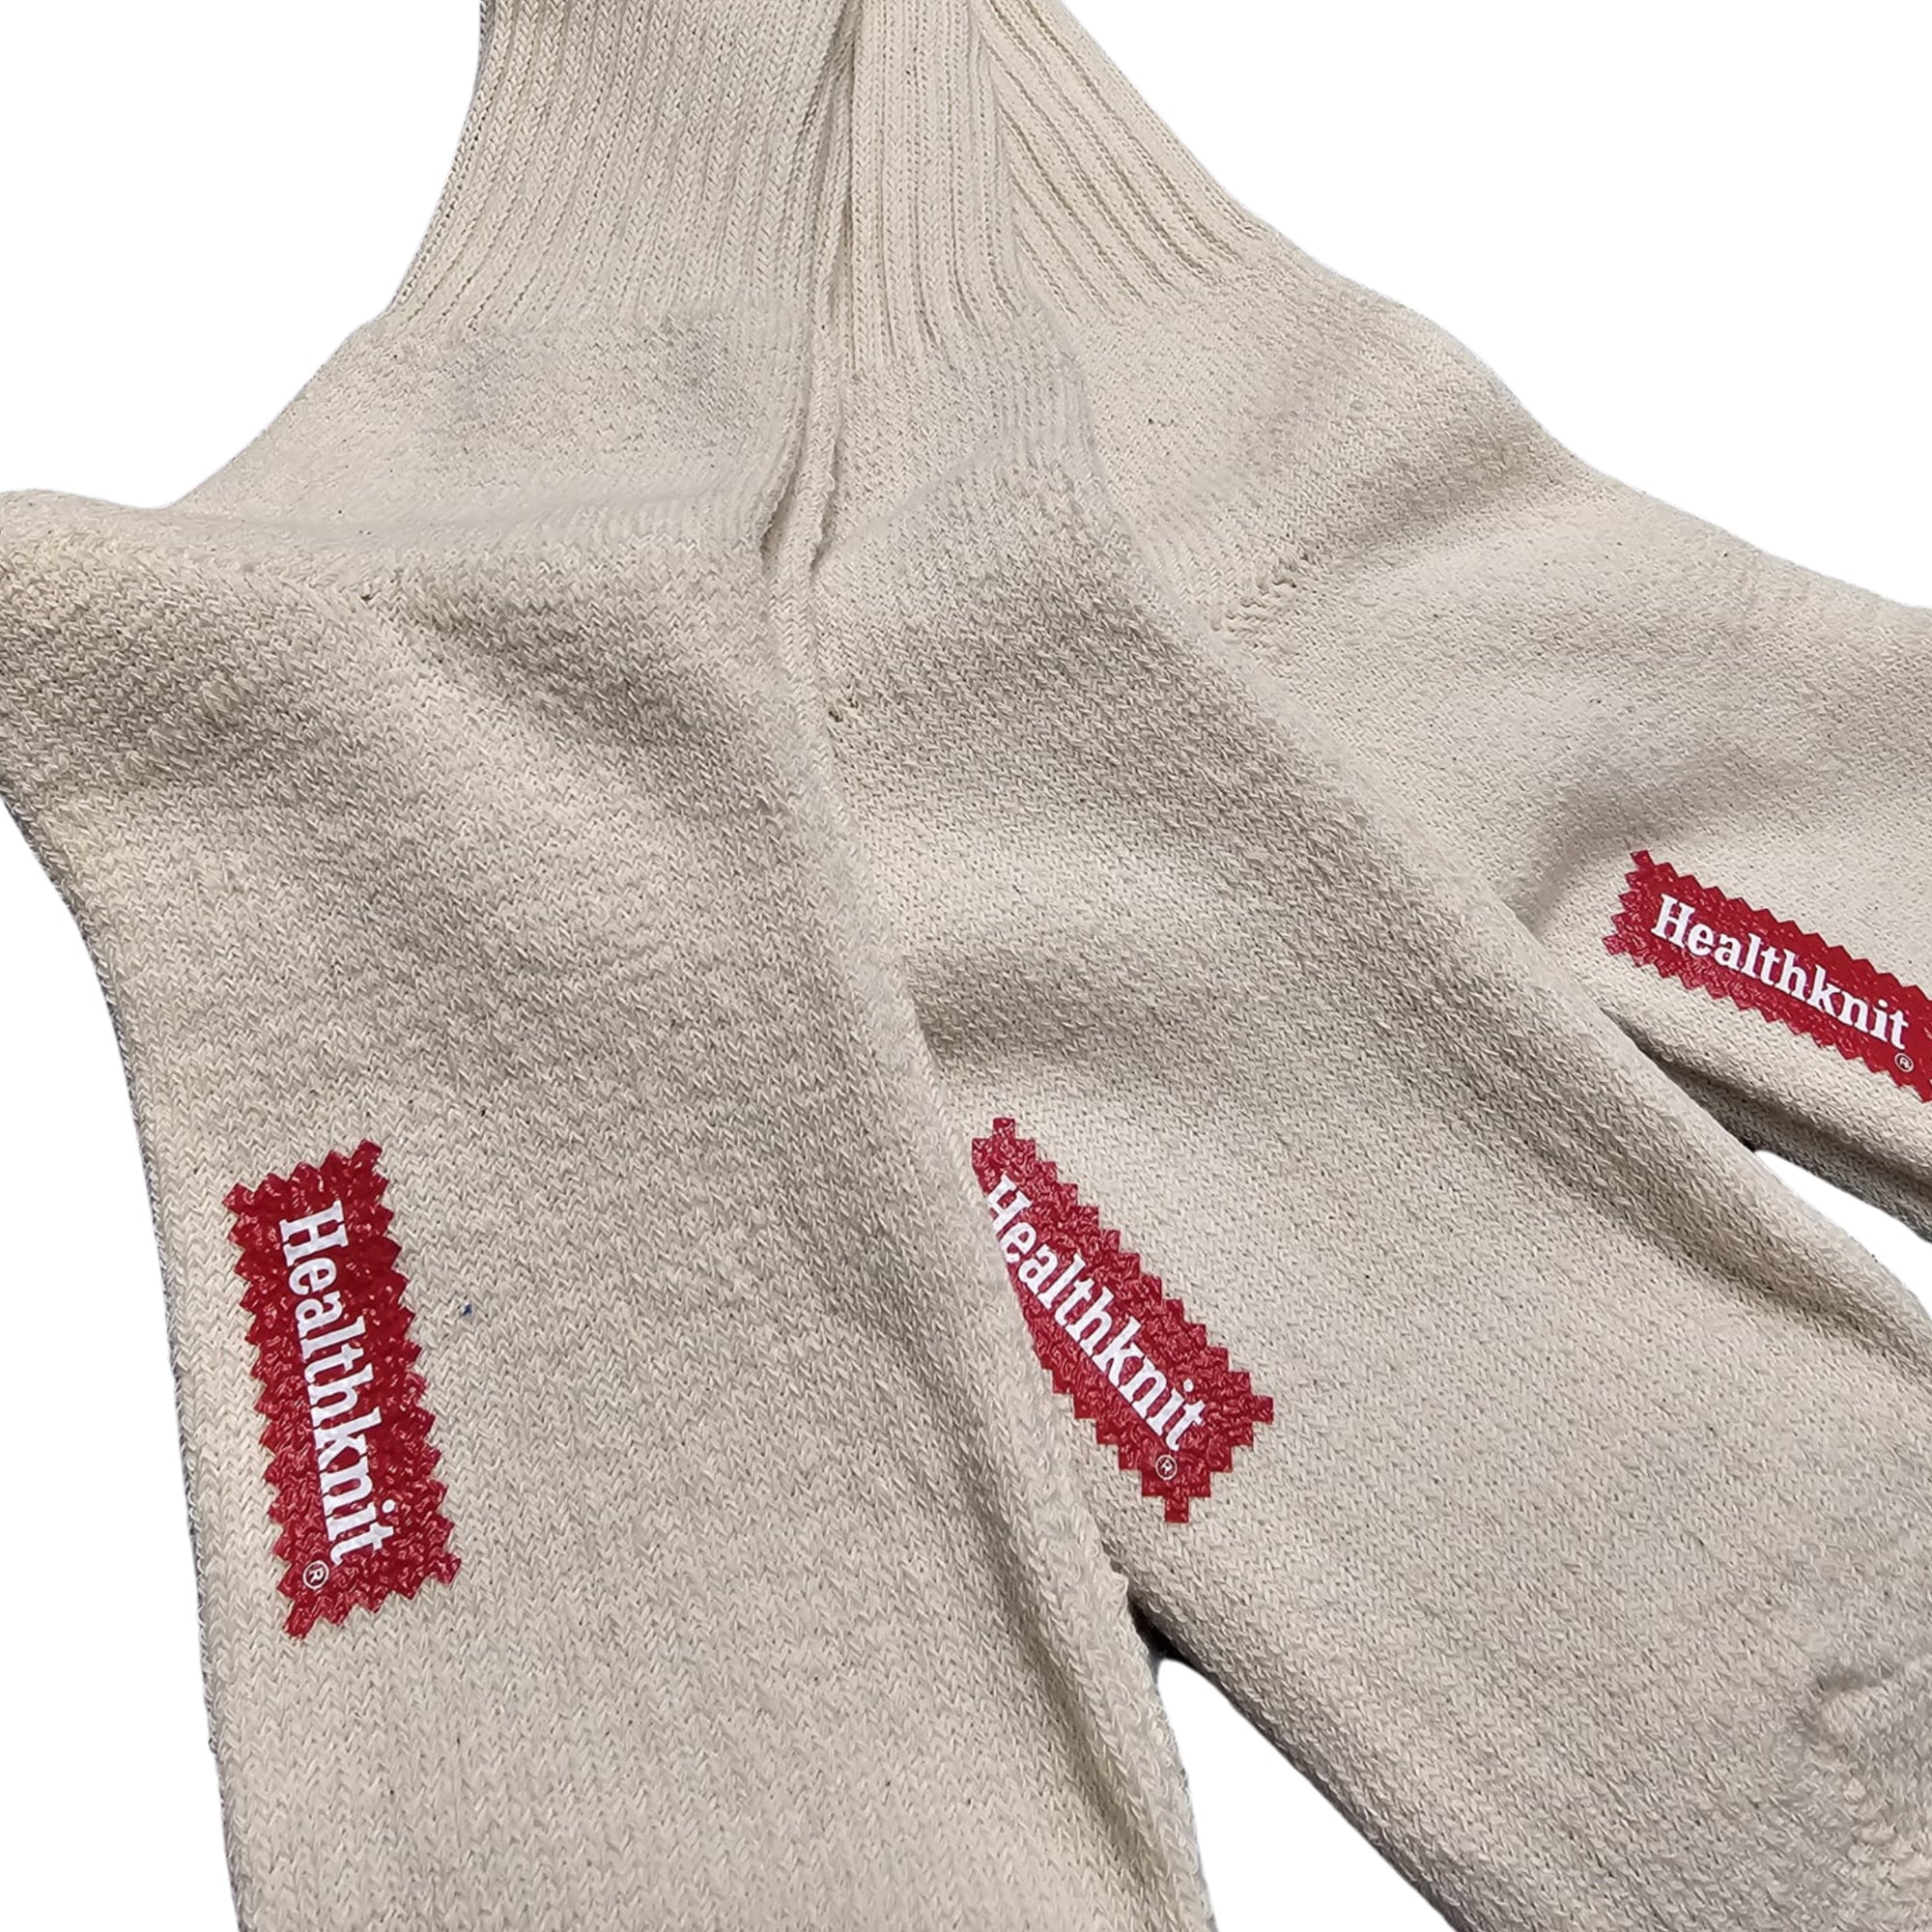 Healthknit Socks 3 Pack - Off White